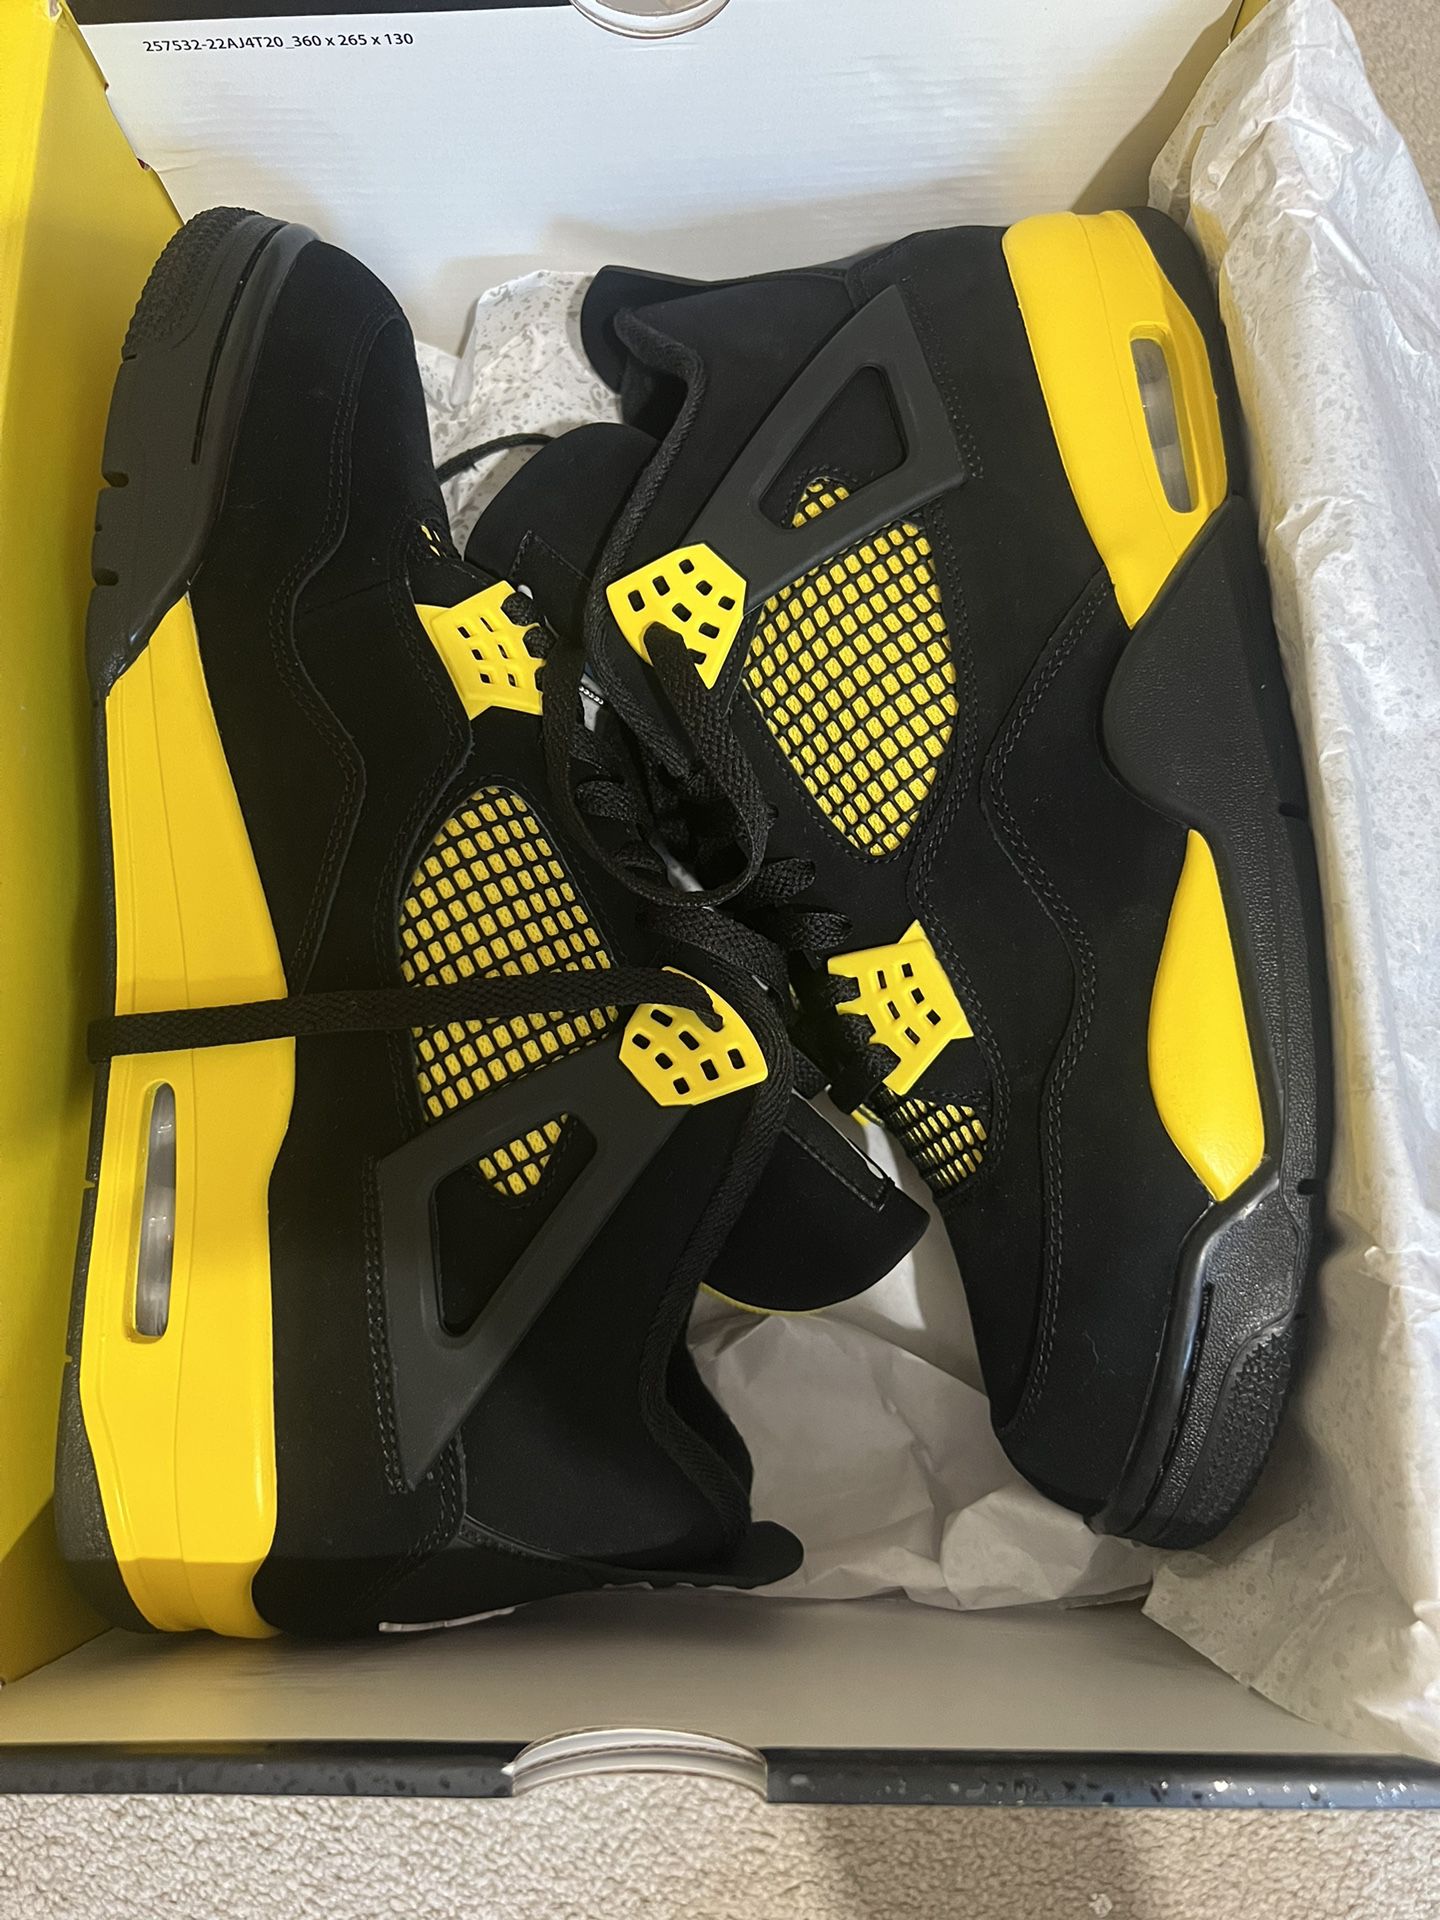 Jordan 4 “yellow thunder” size 13